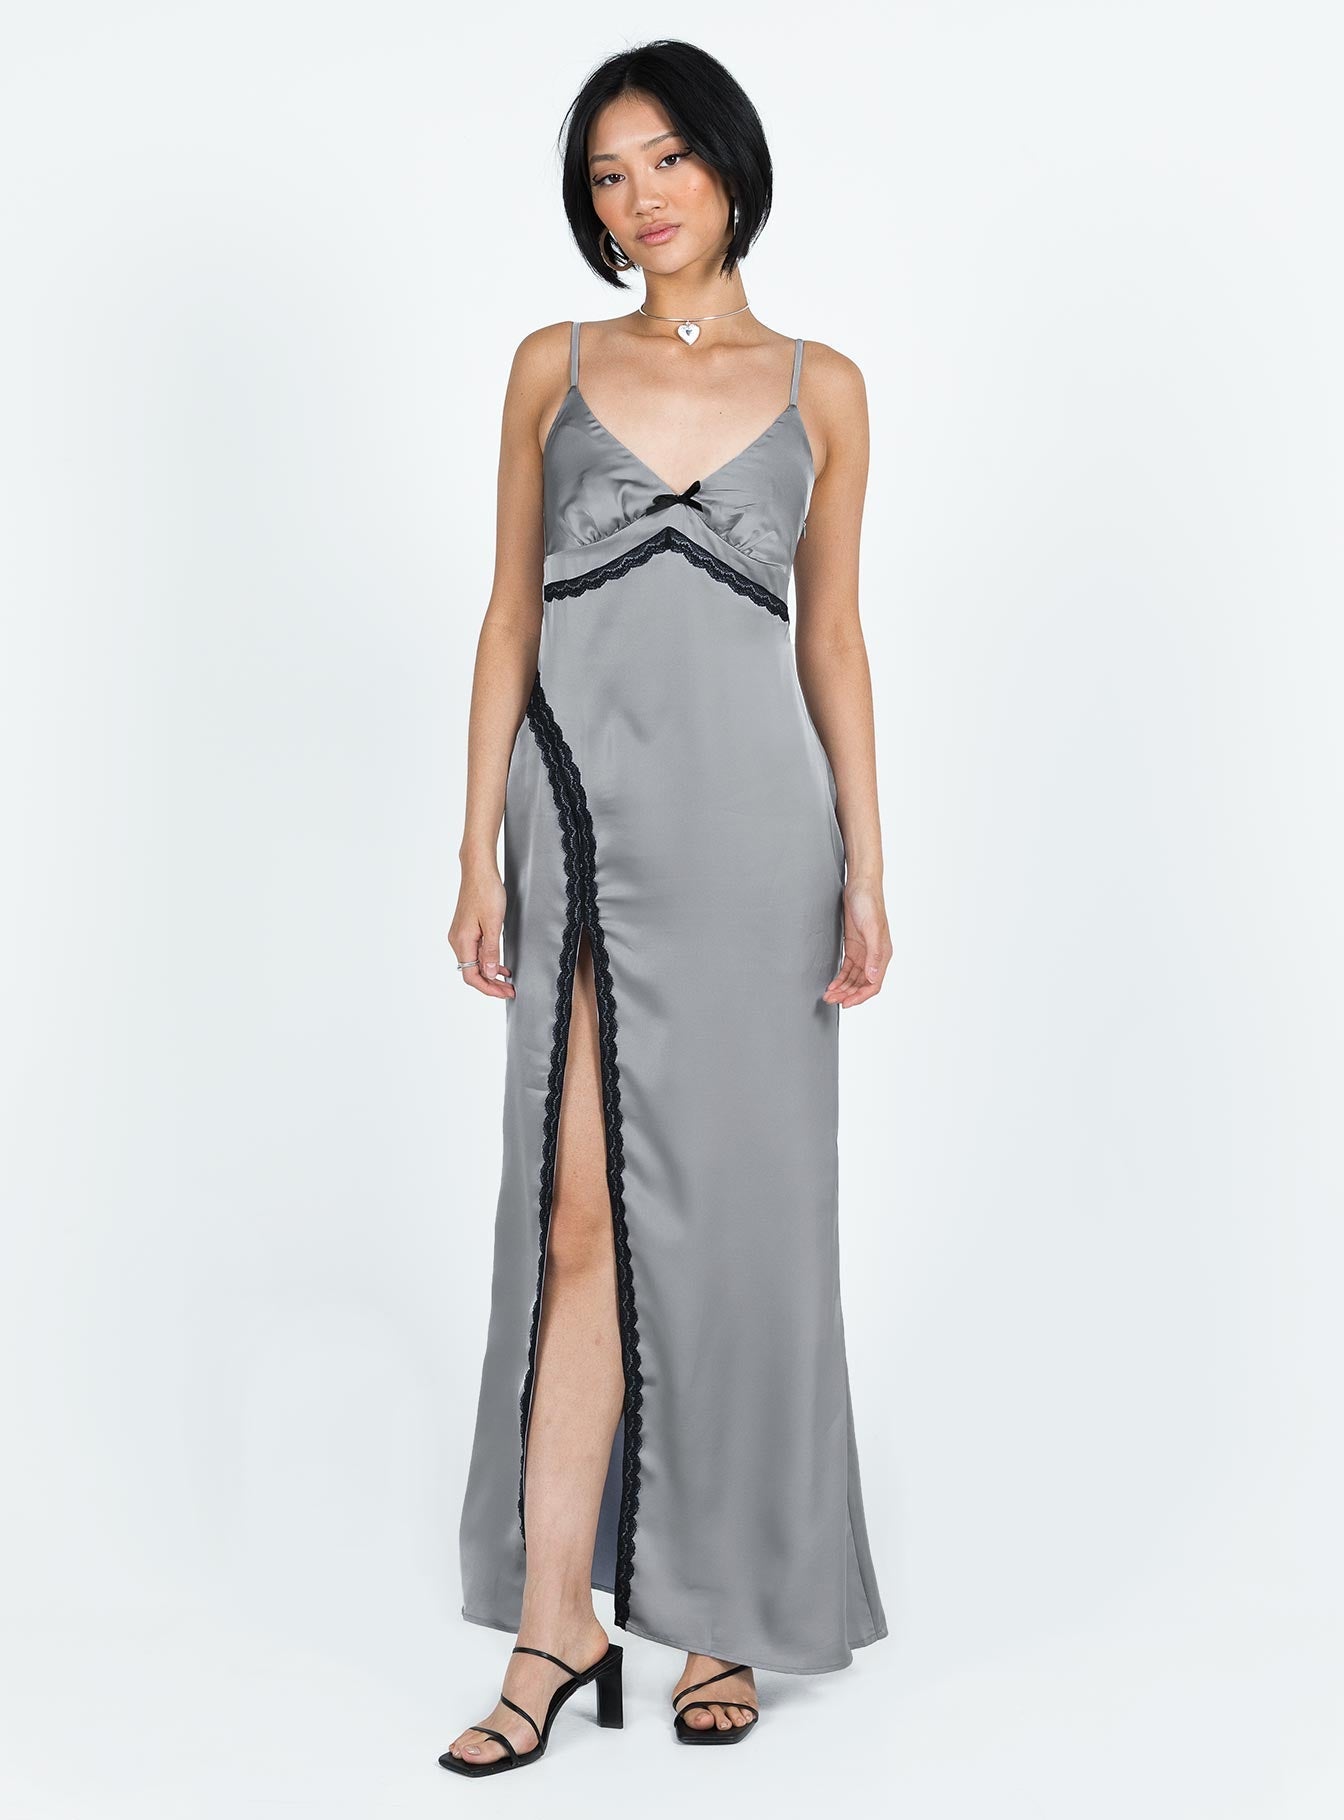 Shop Formal Dress - Sidney Lace Trim Maxi Dress Grey sixth image